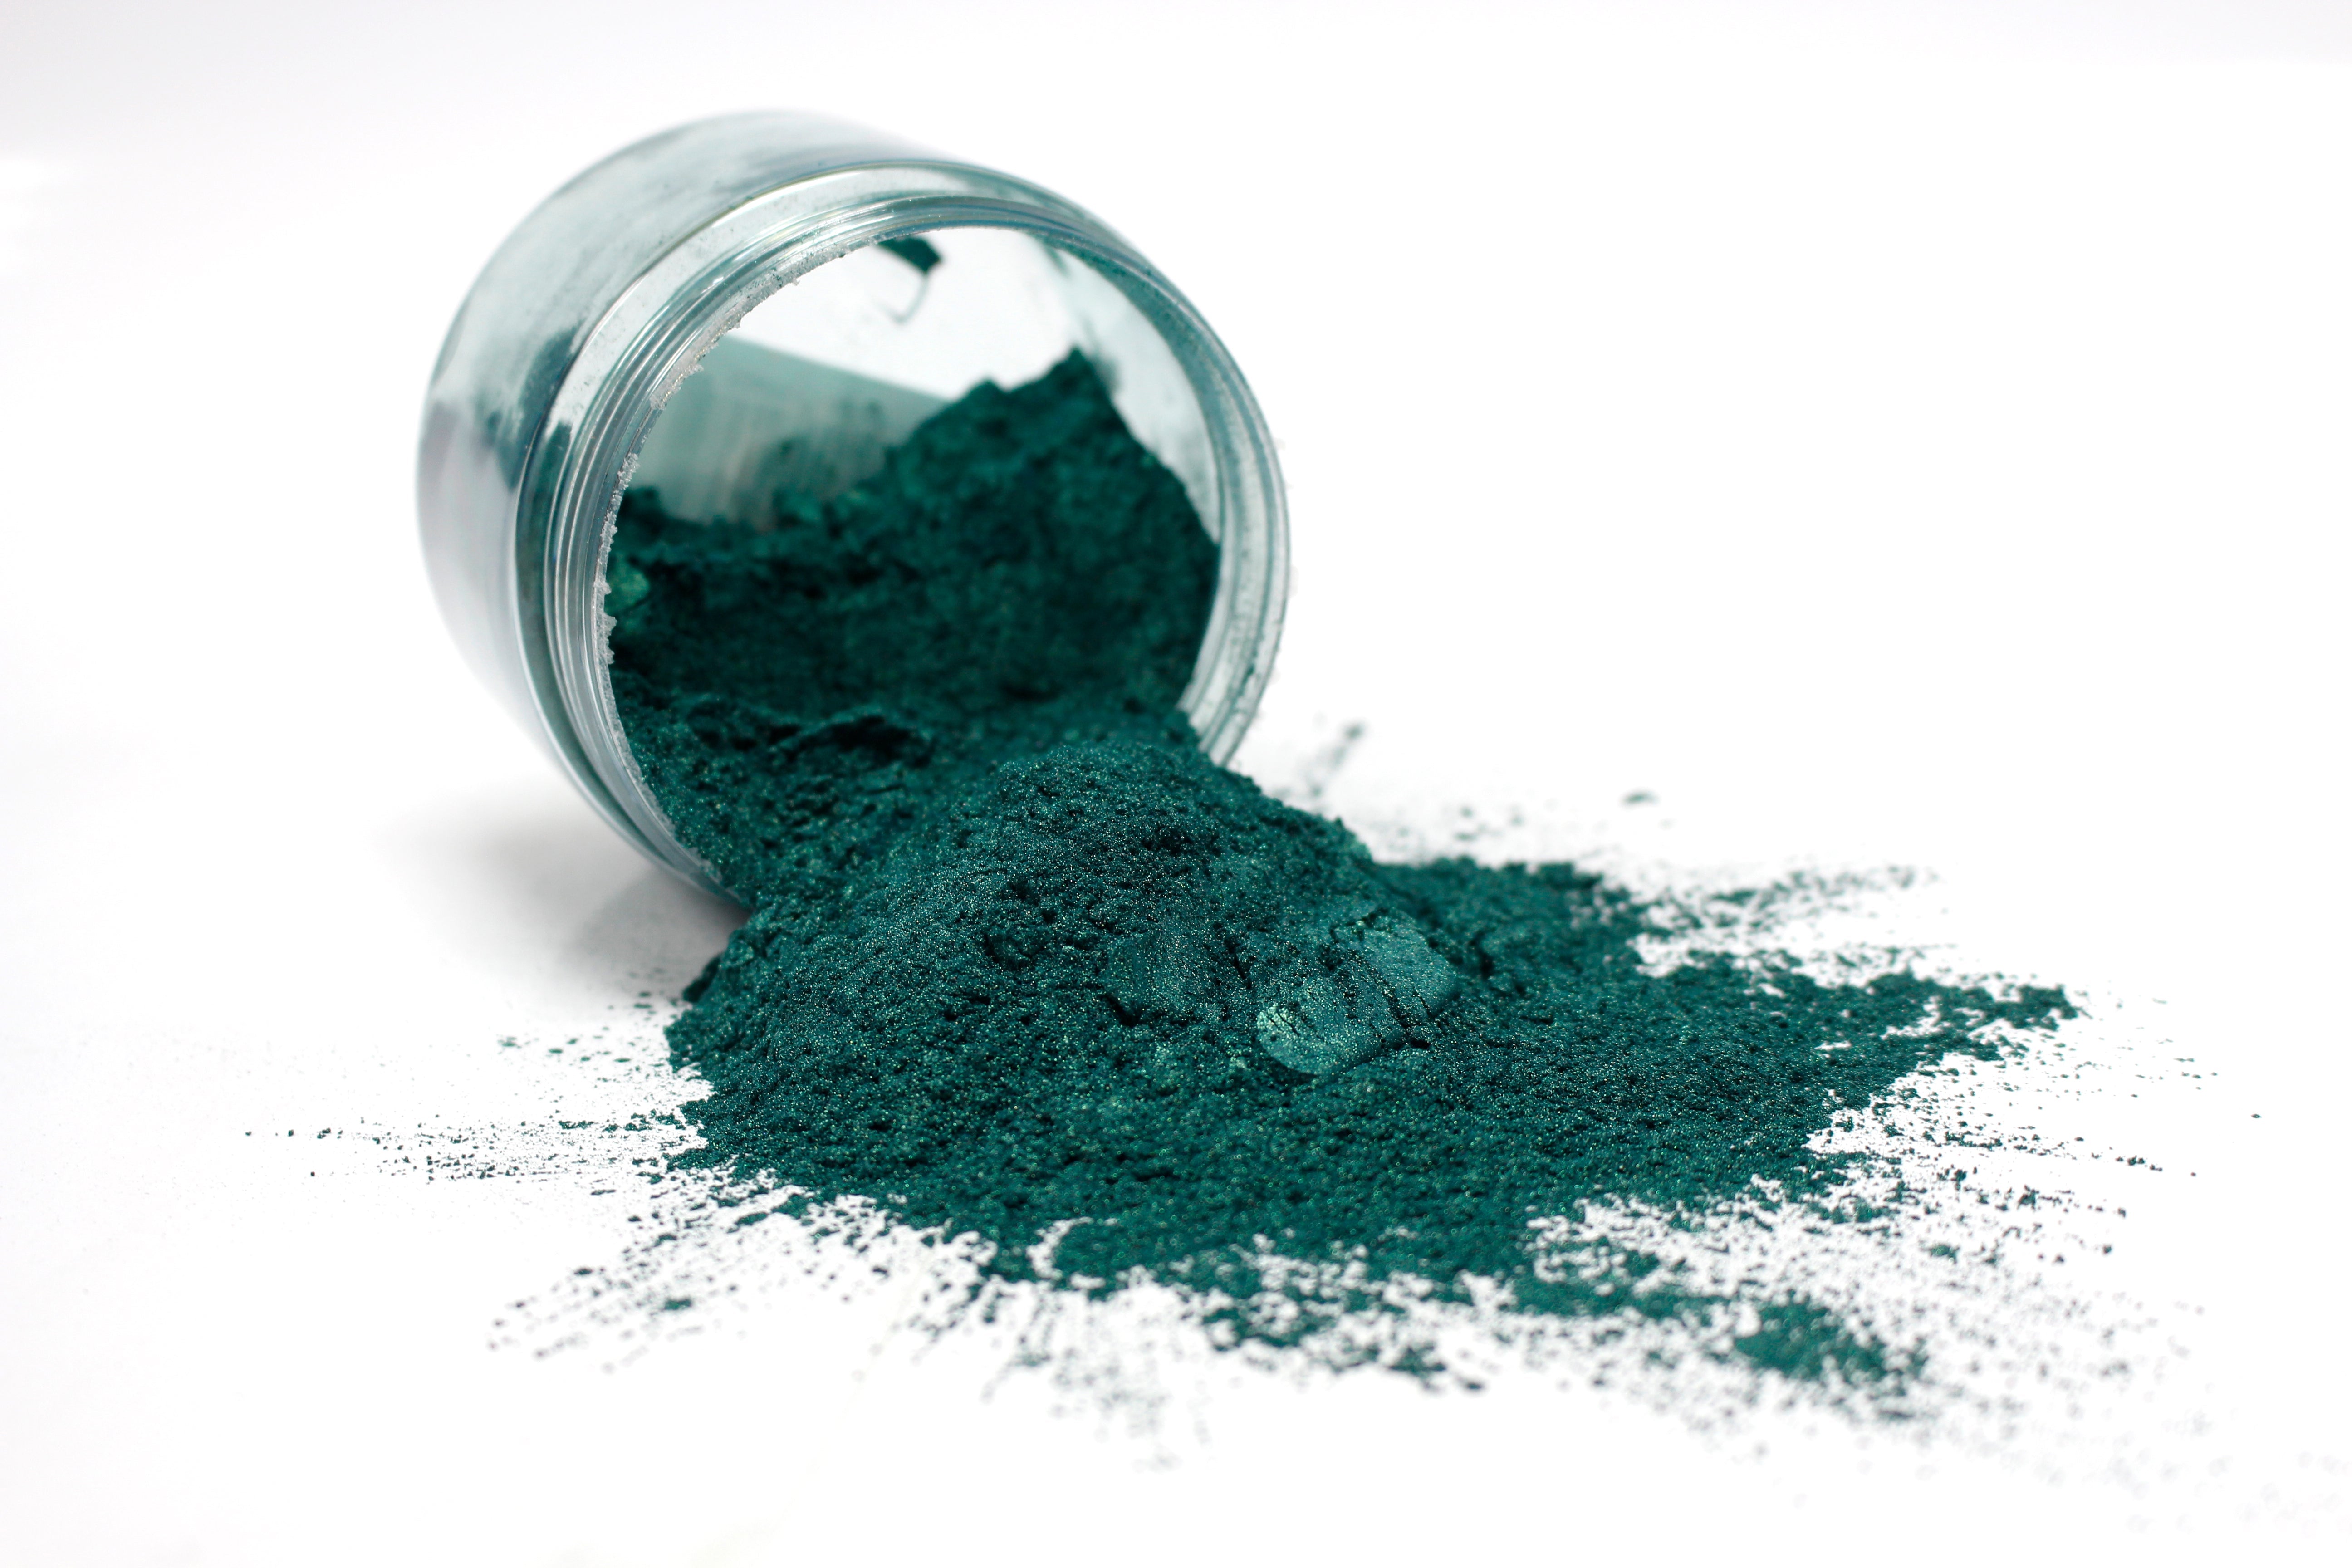 Pure Copper - Epoxy Resin Color Pigment - Mica Powder 50g – MEYSPRING